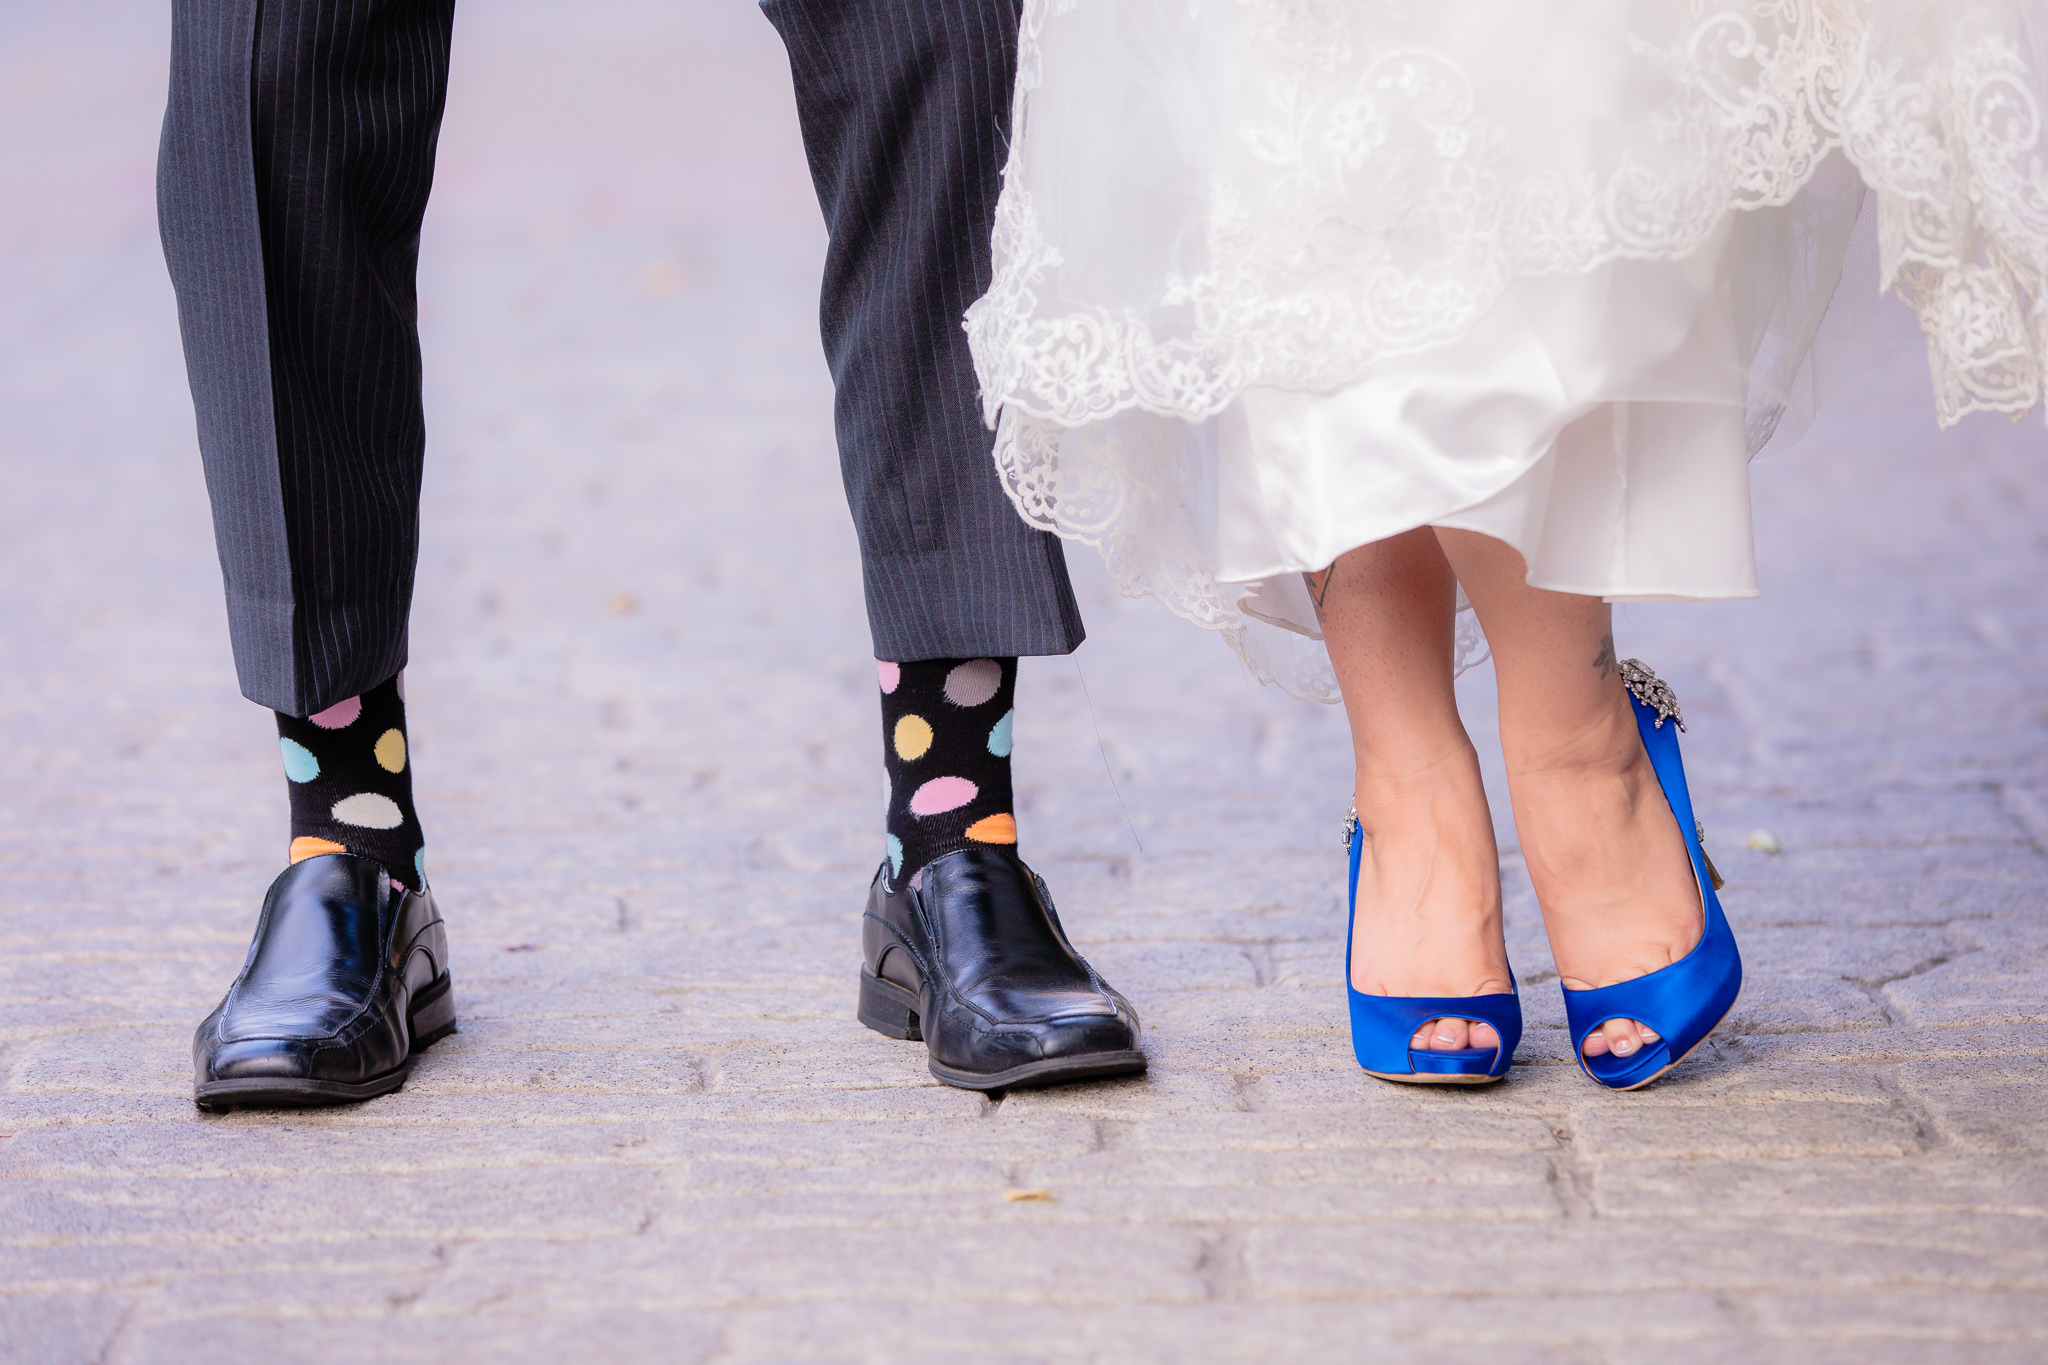 Groom's polkadot socks and bride's royal blue Badgley Mischka shoes